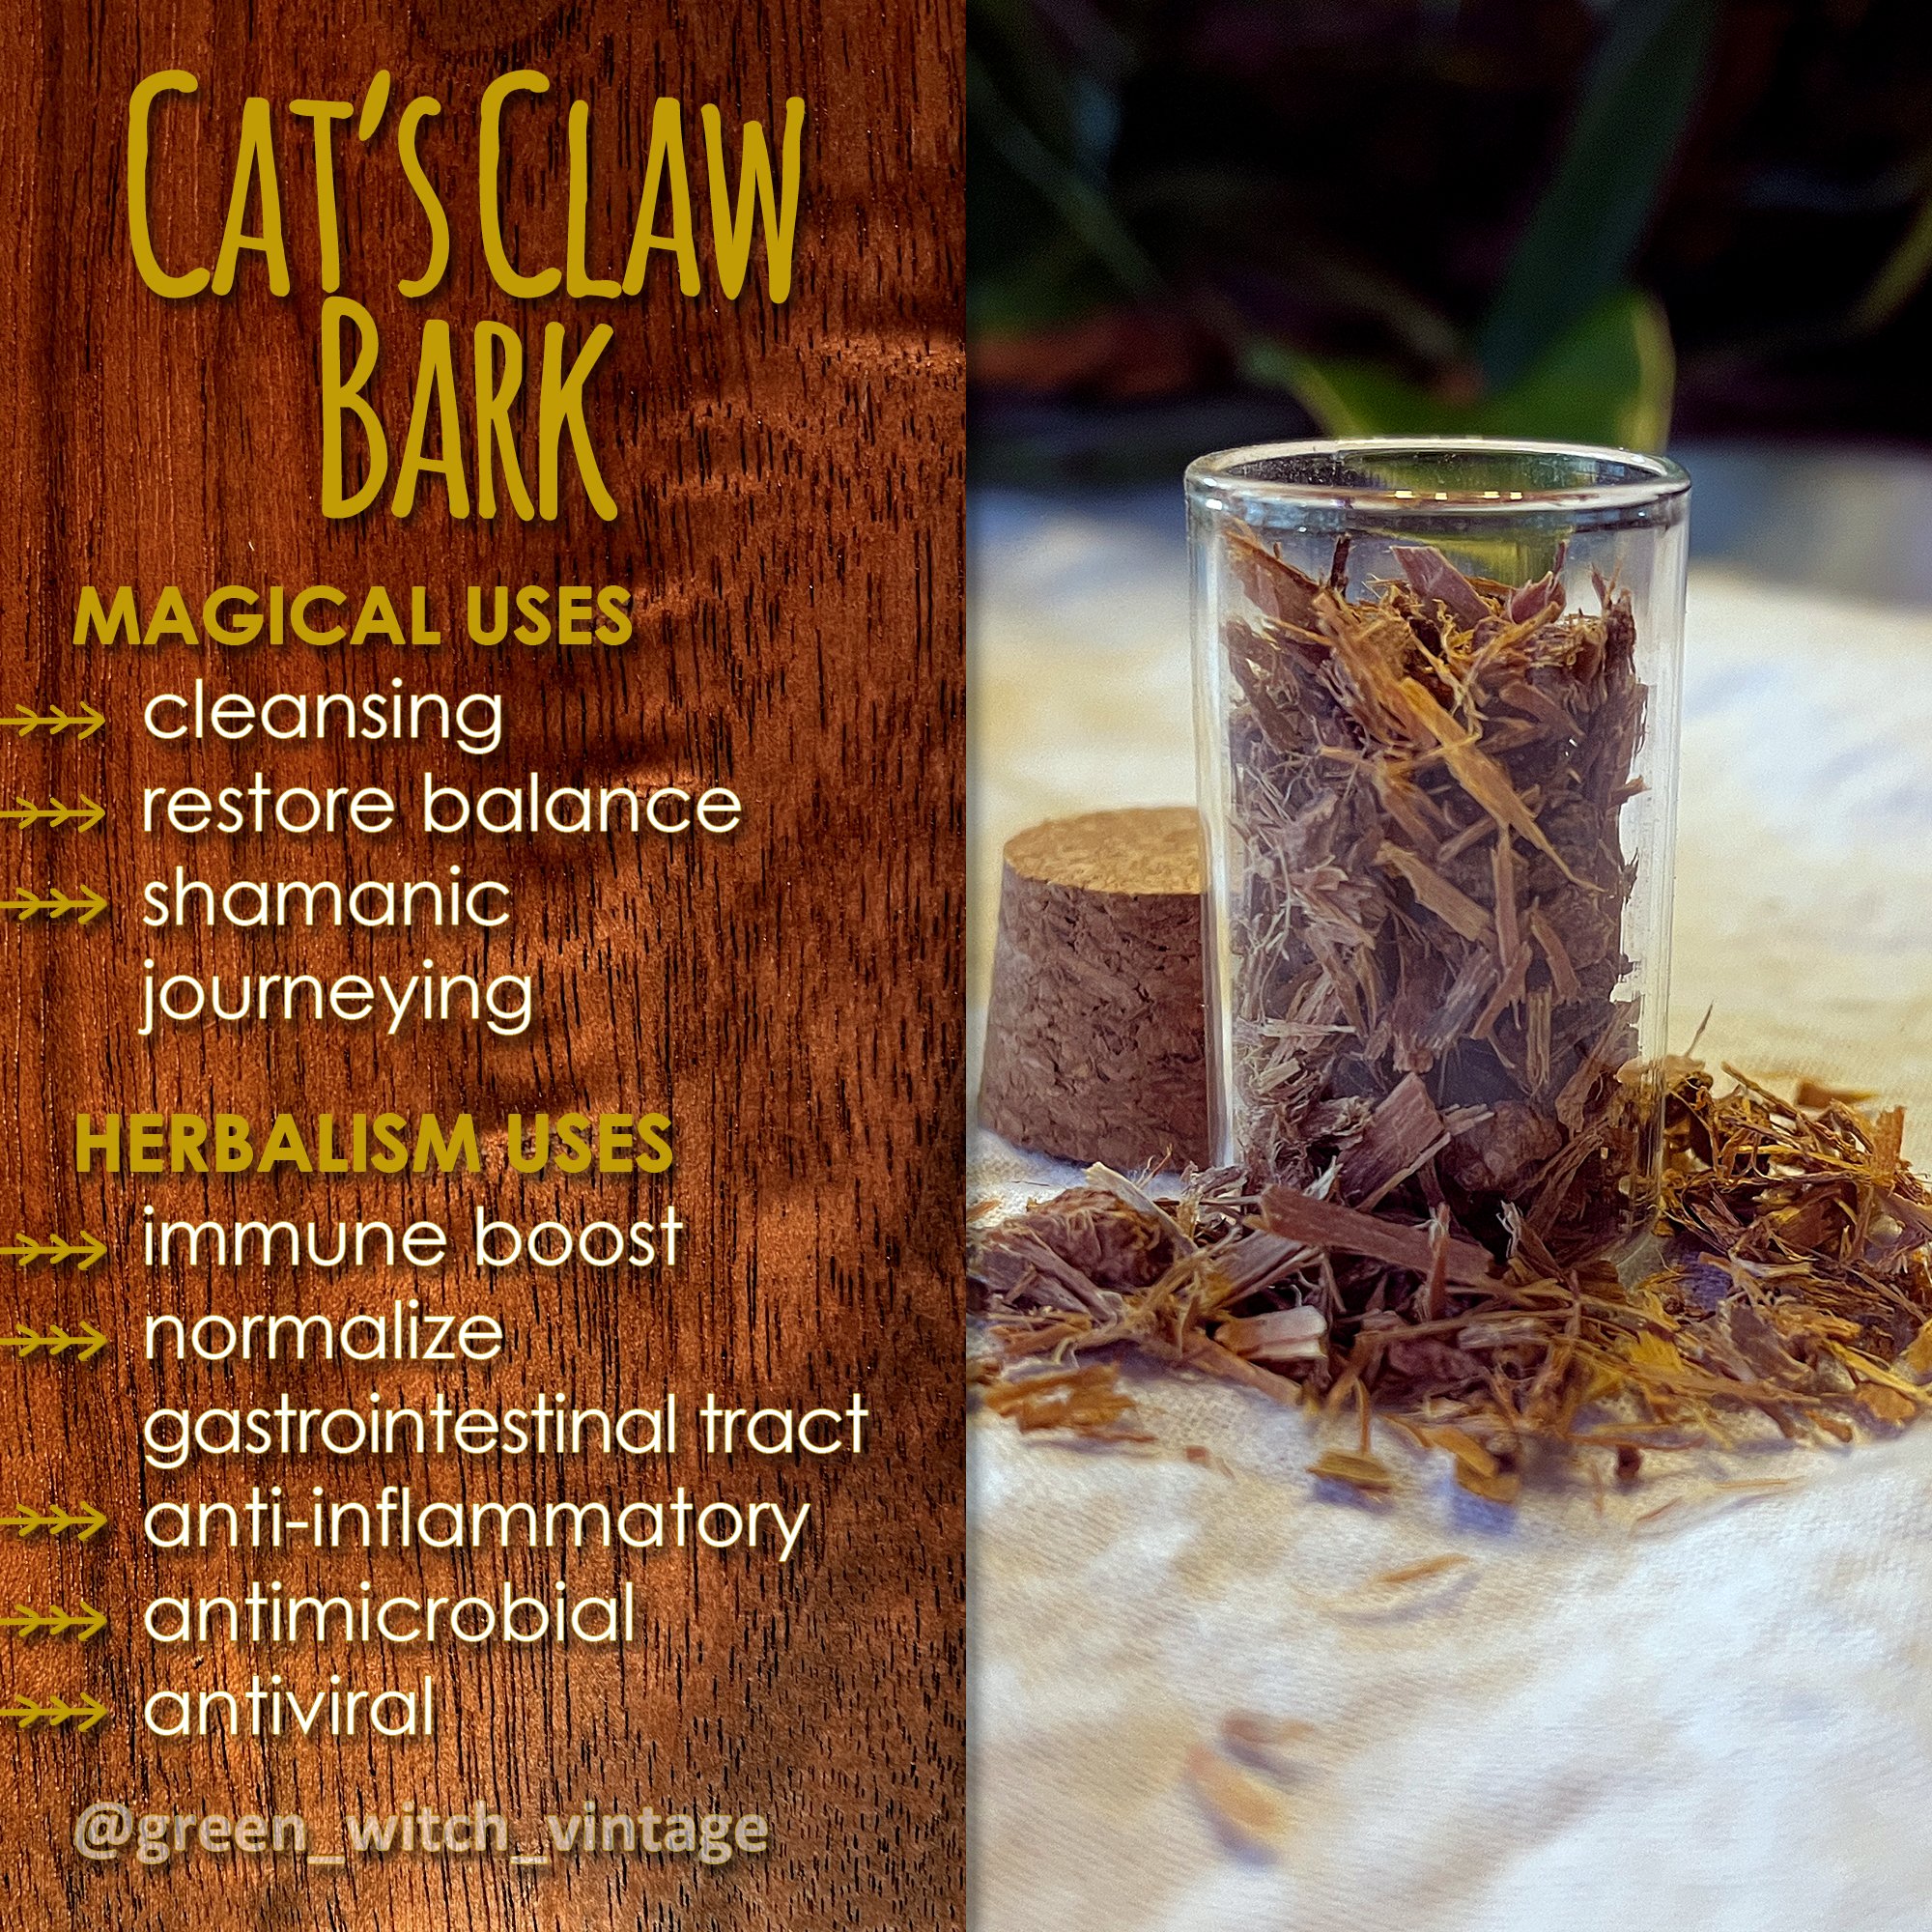 #catsclaw #catsclawbark  #herbalism #herbalist #herbal #herbalhealing #folkmedicine #apothecary #correspondences #magicalcorrespondences #magicalherbs #magicherbs #herbalmagic